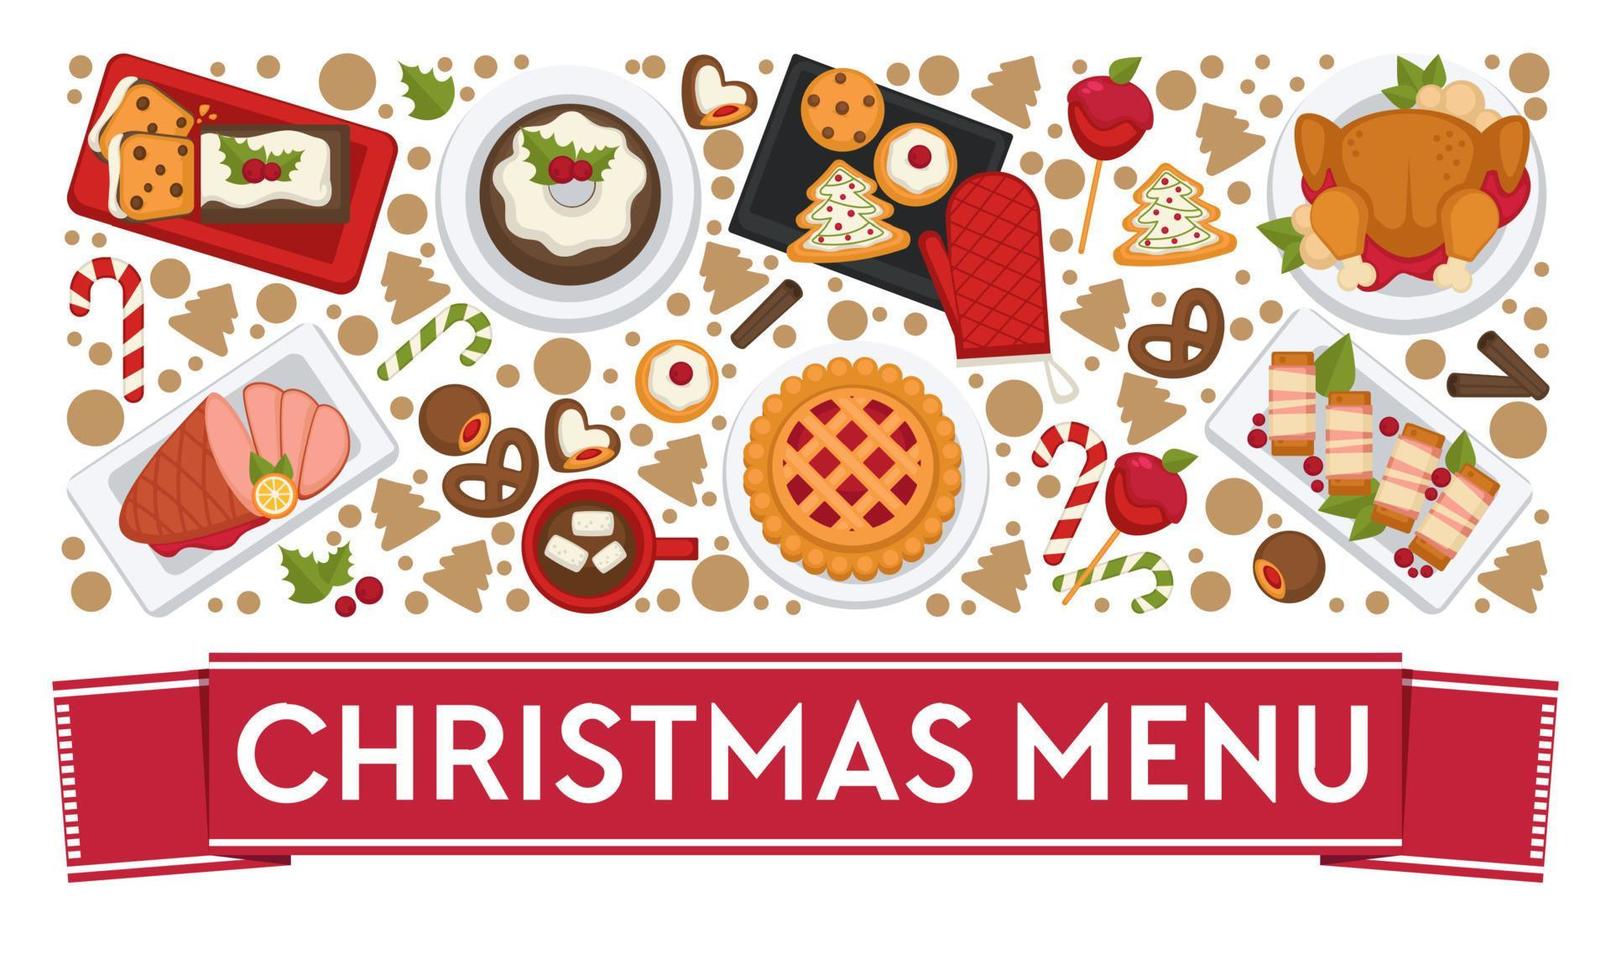 Christmas menu, restaurants or diner dishes vector